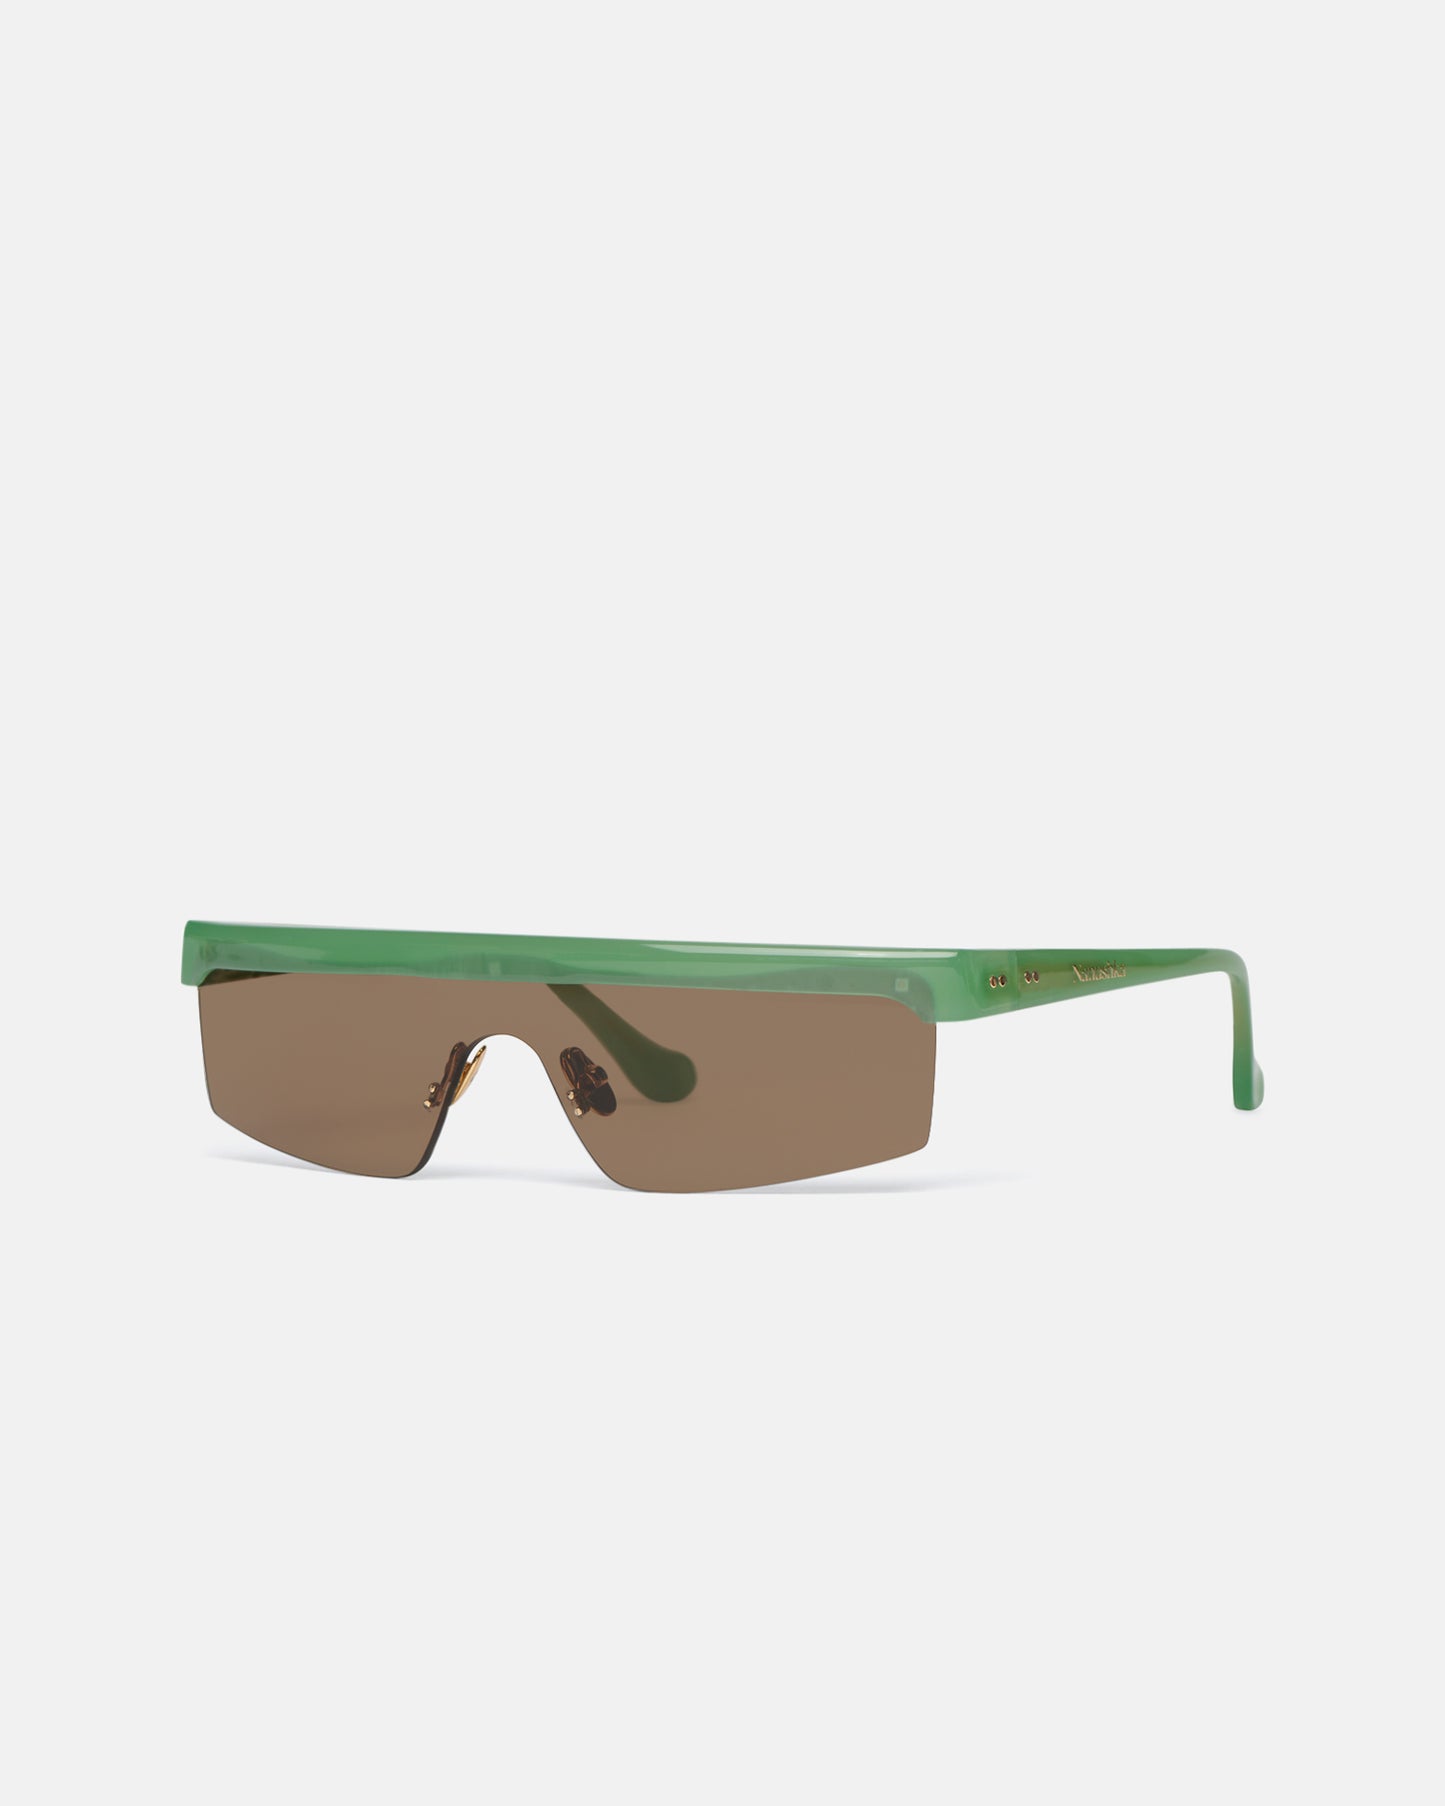 Callias - Bio-Plastic Sunglasses - Green Eyewear